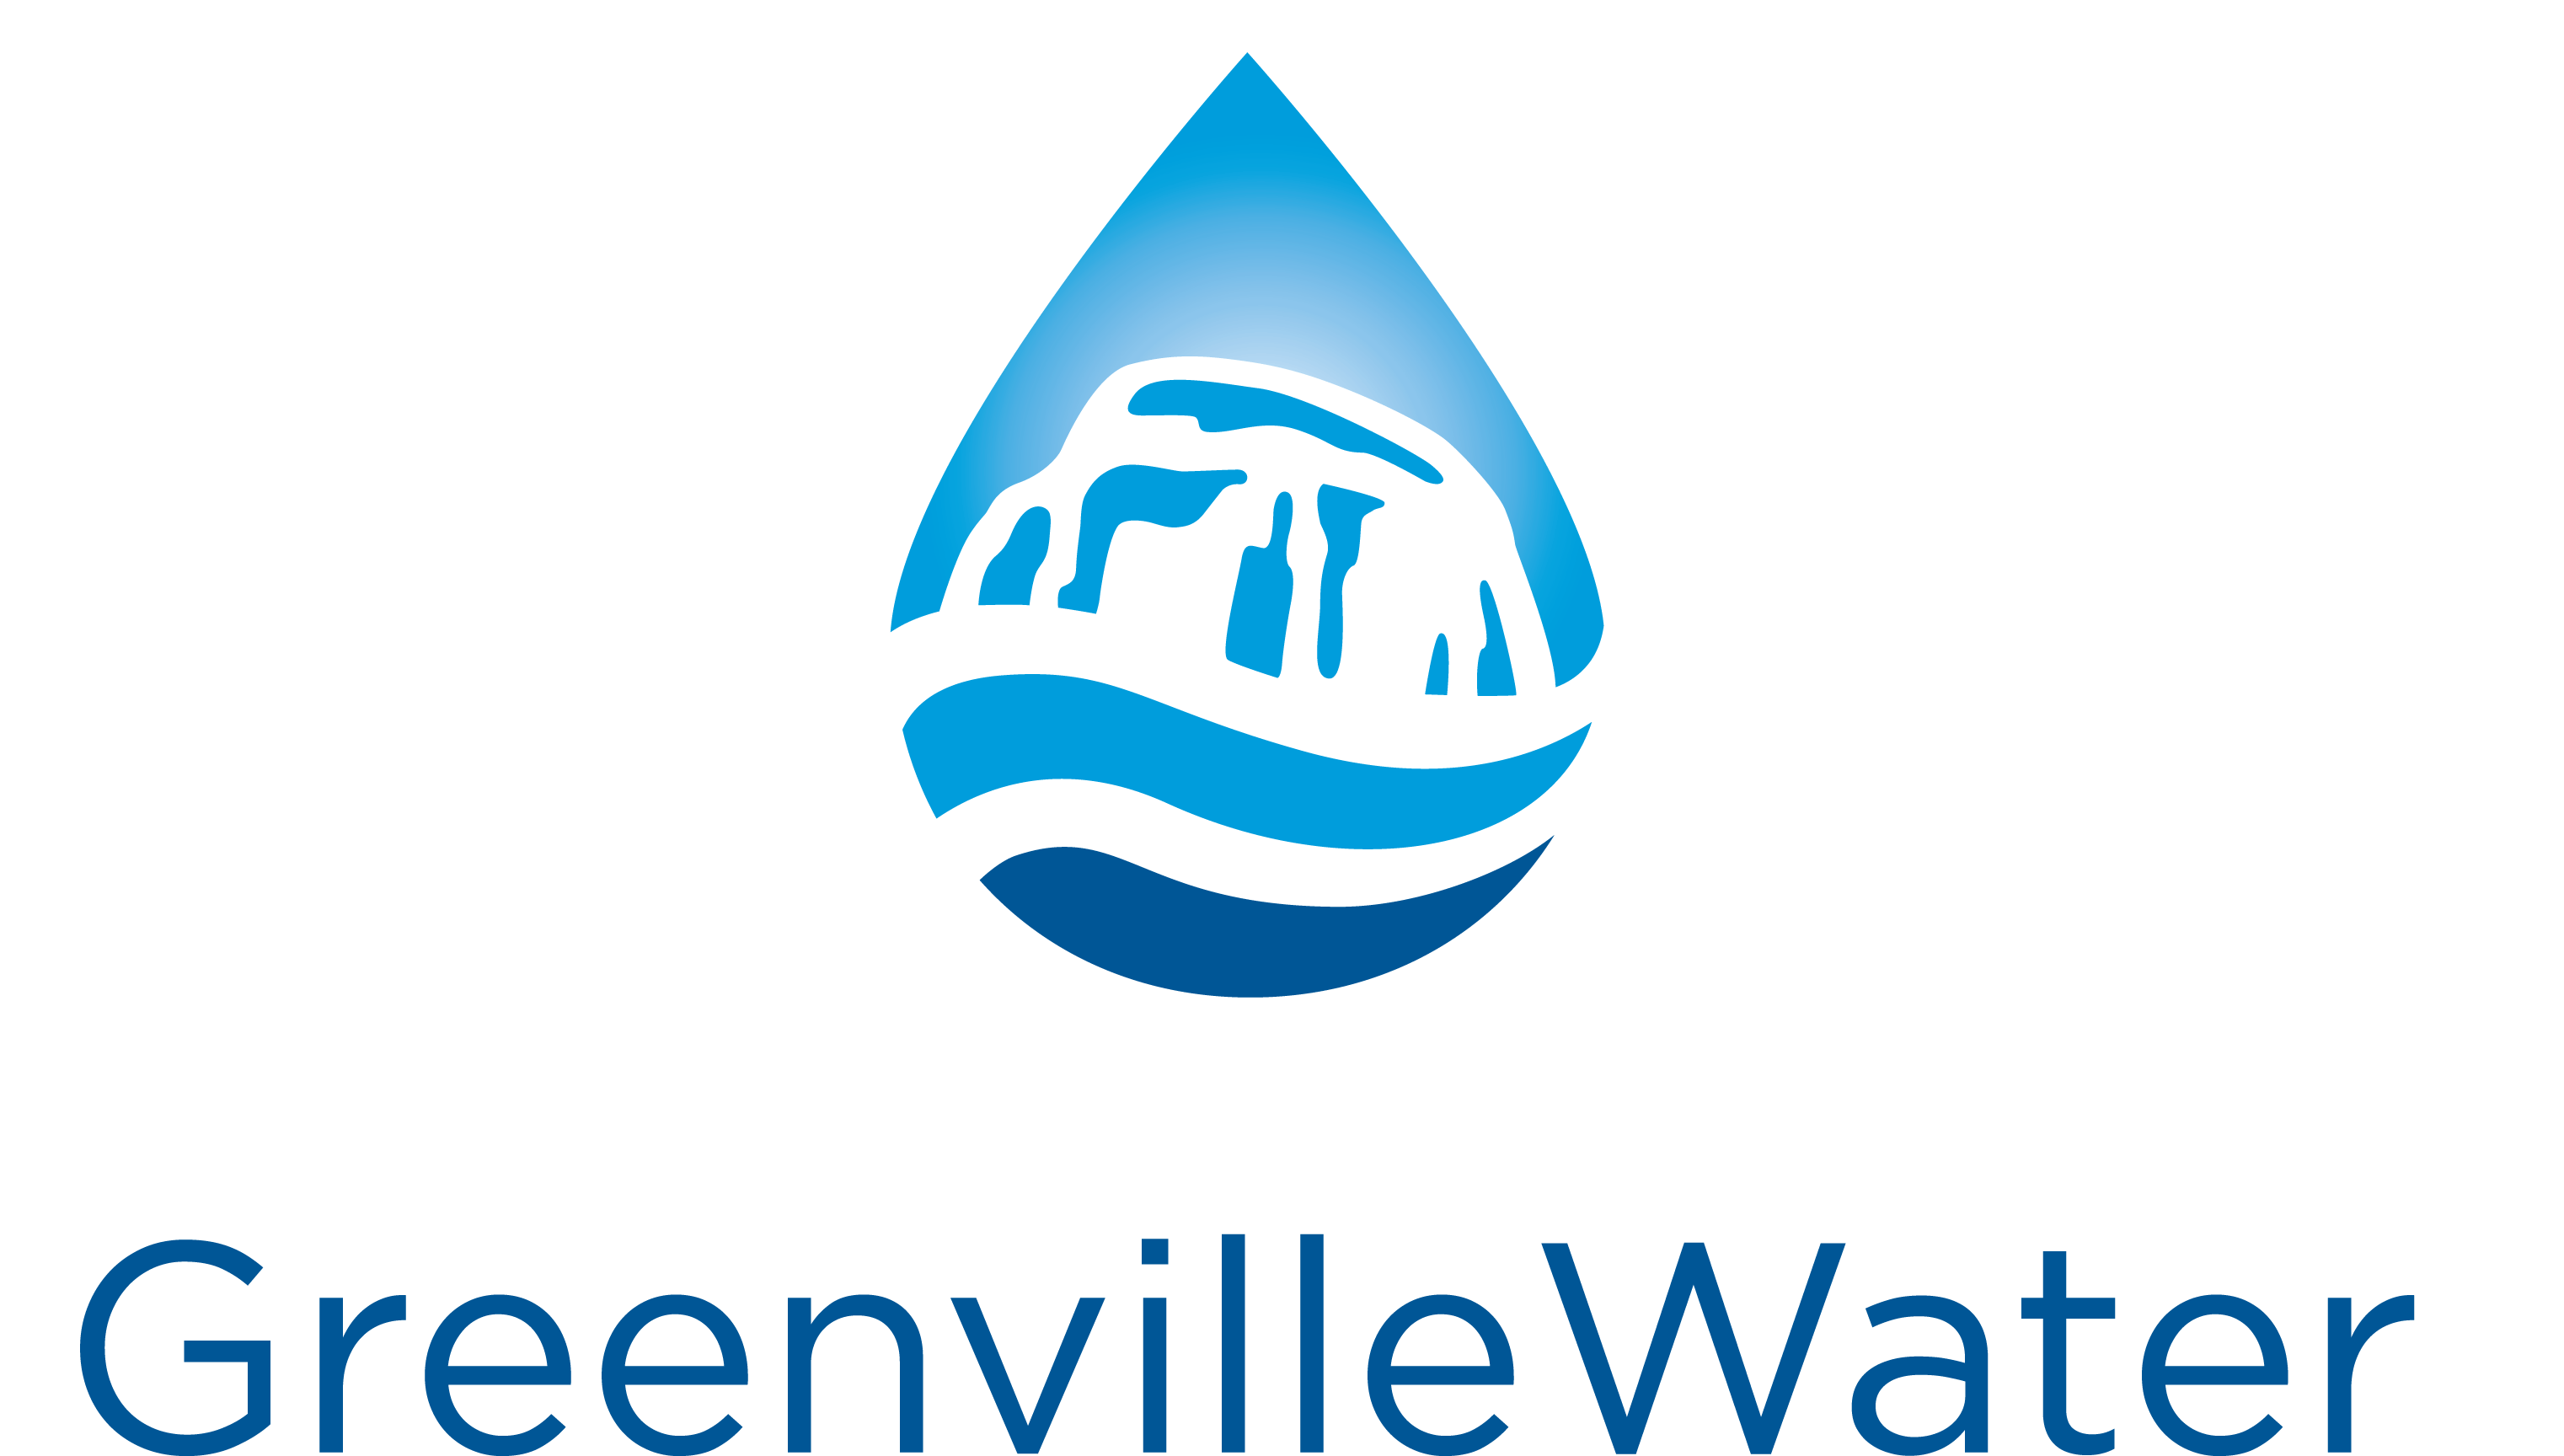 Greenville Logo - Contributors. Public. Clemson University, South Carolina